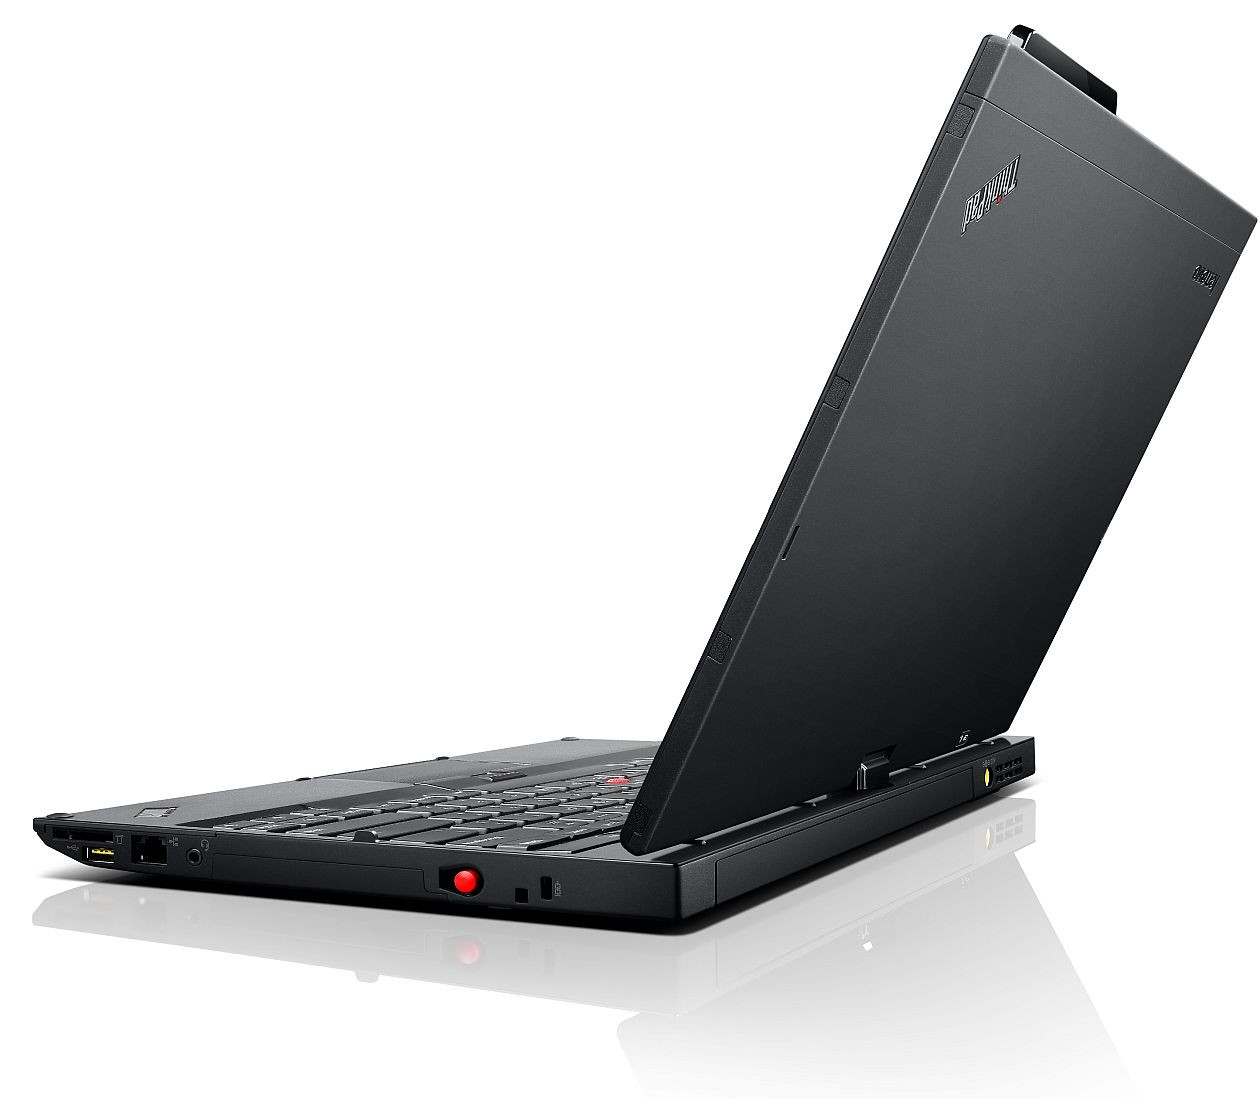 Refurbished Lenovo Thinkpad x230 Core i3 tablet on Sale